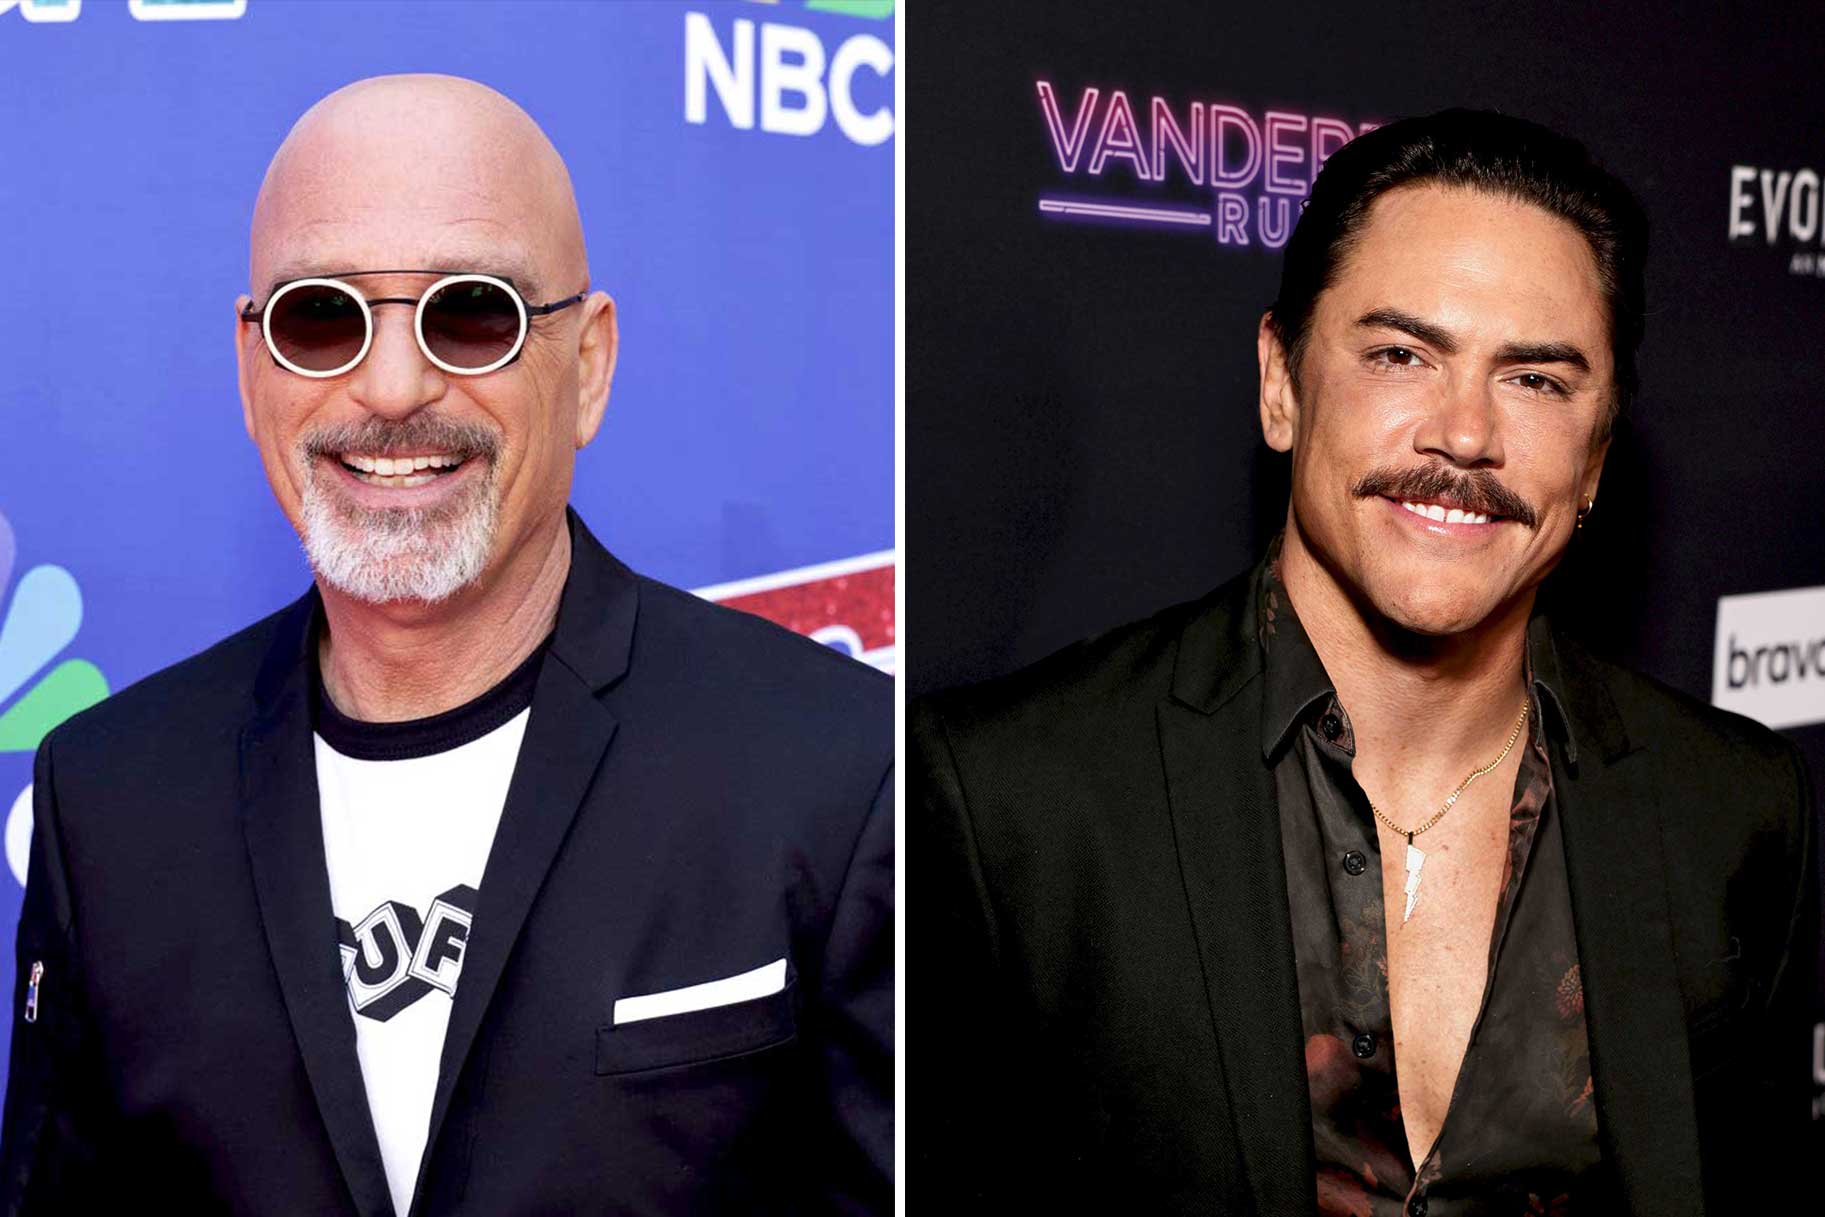 Left: Howie Mandel Season 18 of America's Got Talent; Right: Tom Sandoval at the Vanderpump Rules Season 10 premiere party.